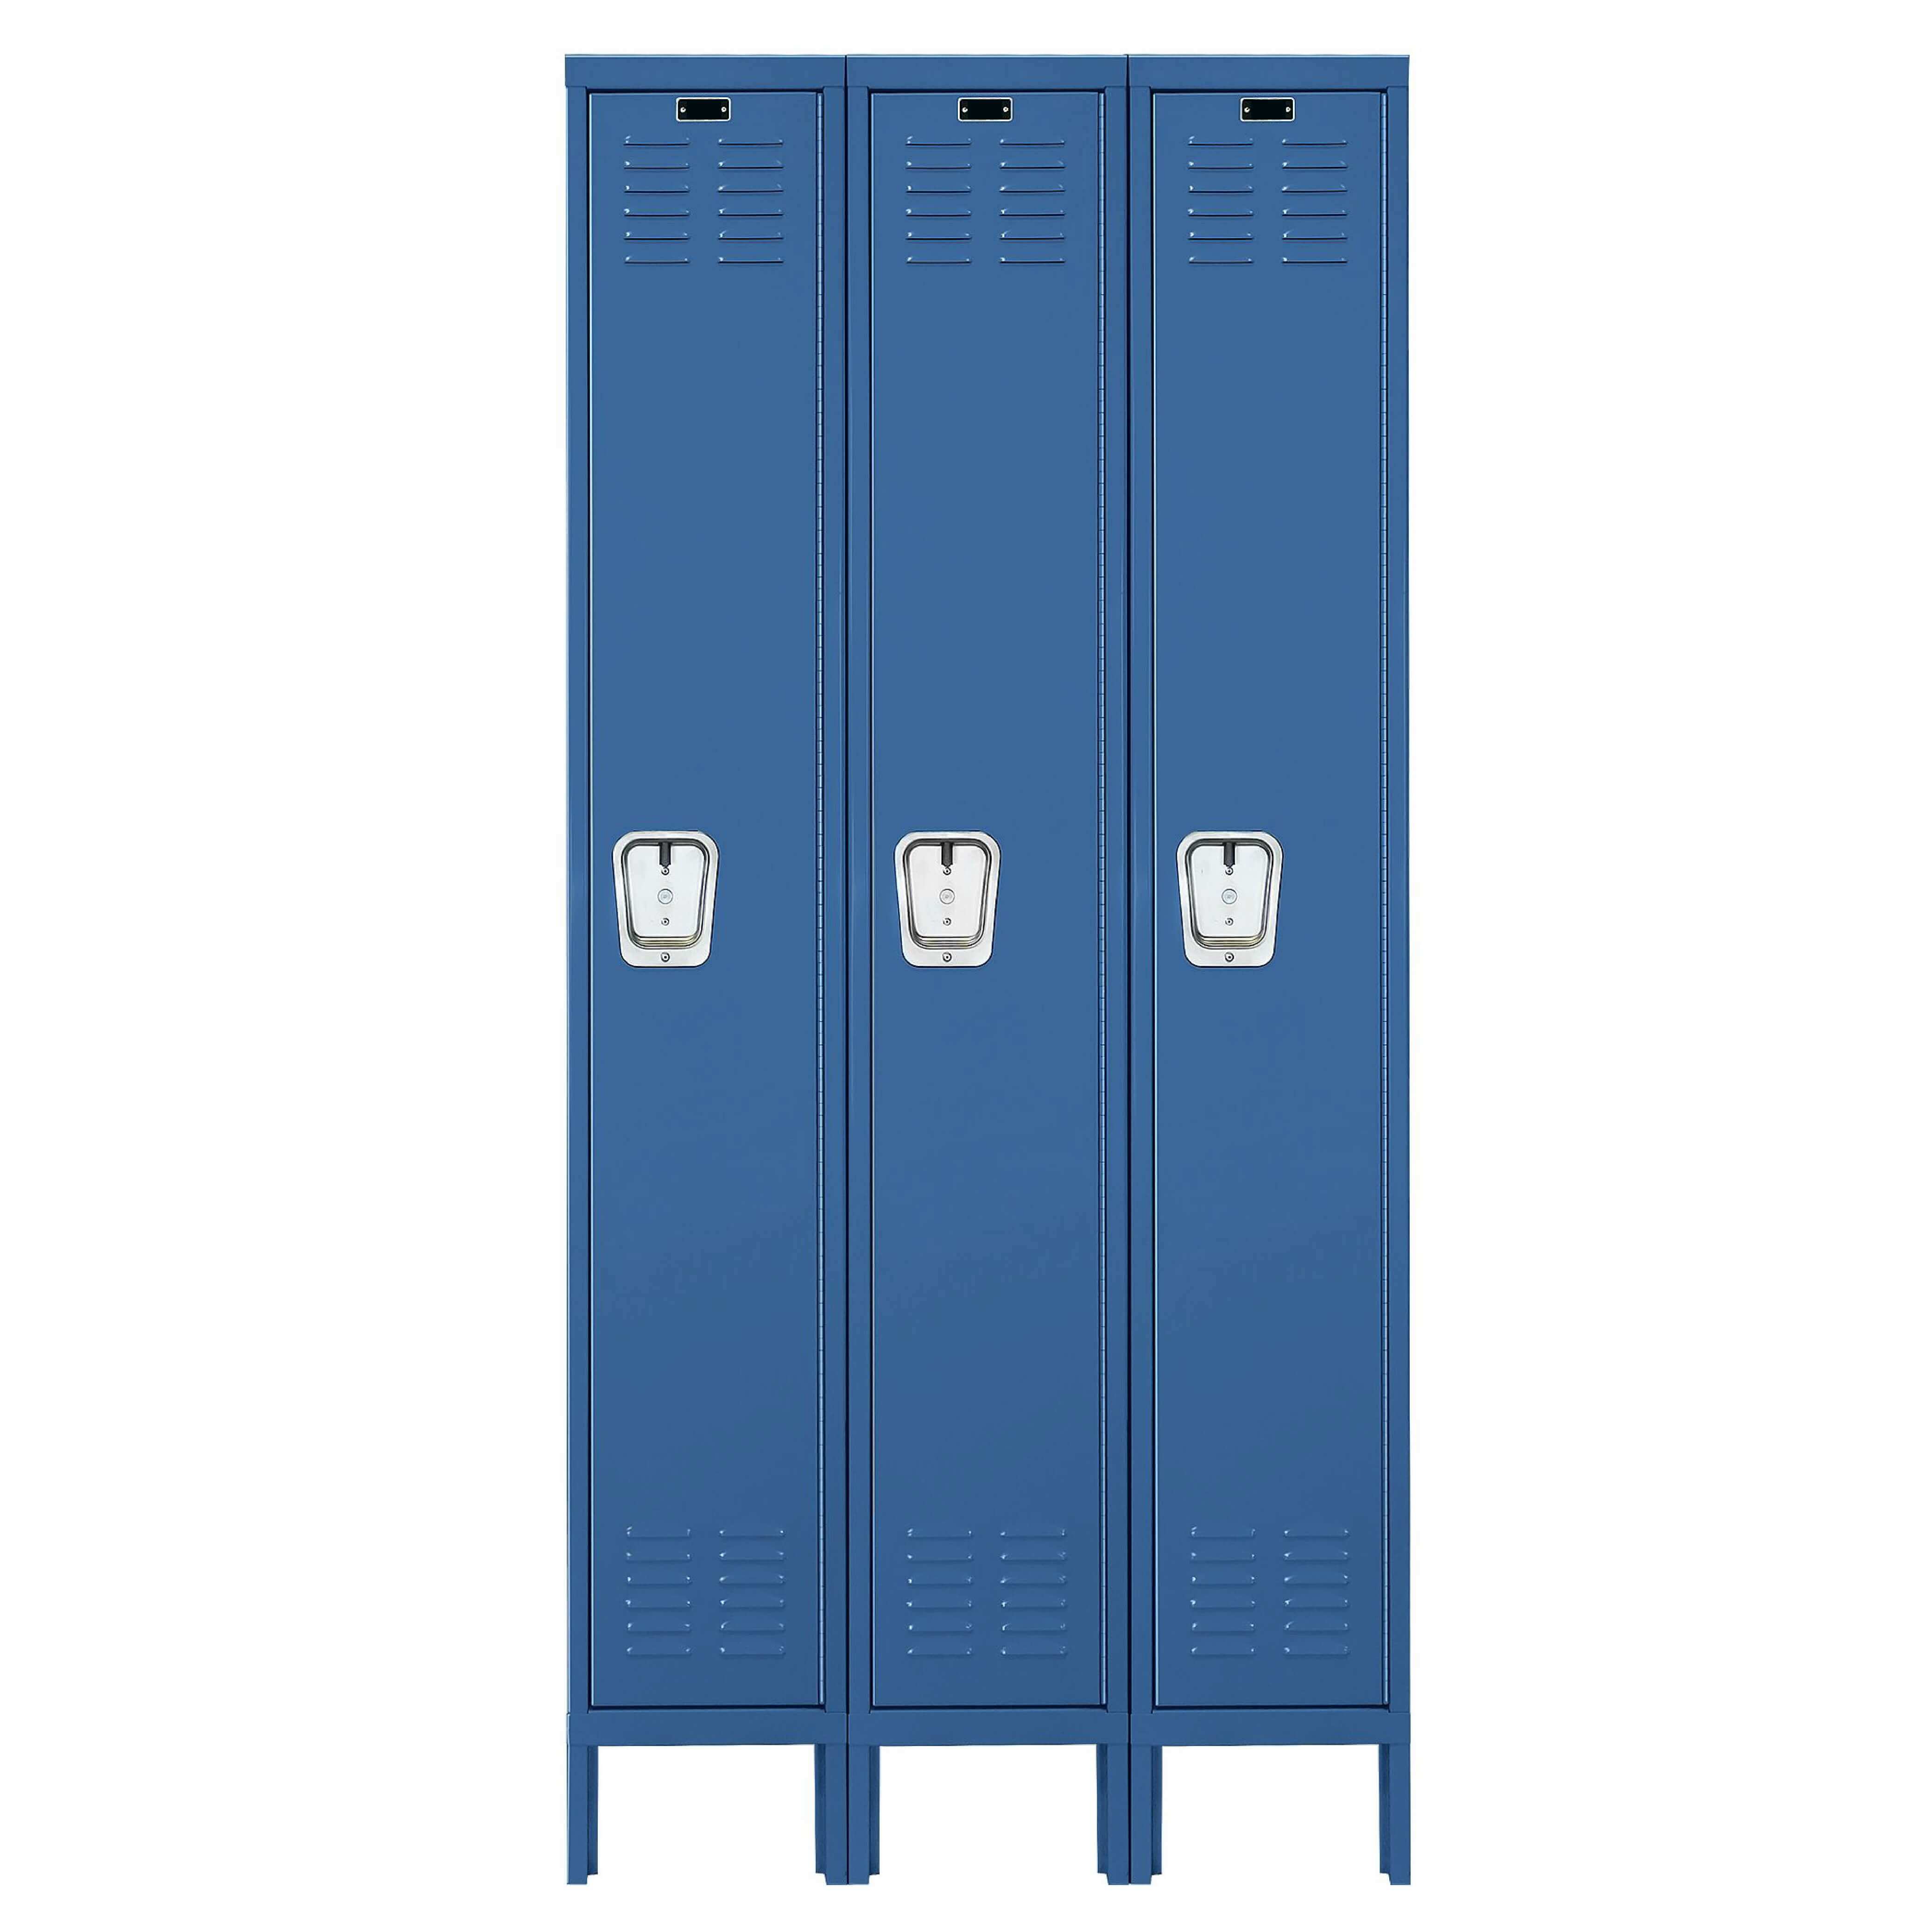 Employee lockers metal lockers patriot series wardrobe lockers 3w 1t marine blue front view